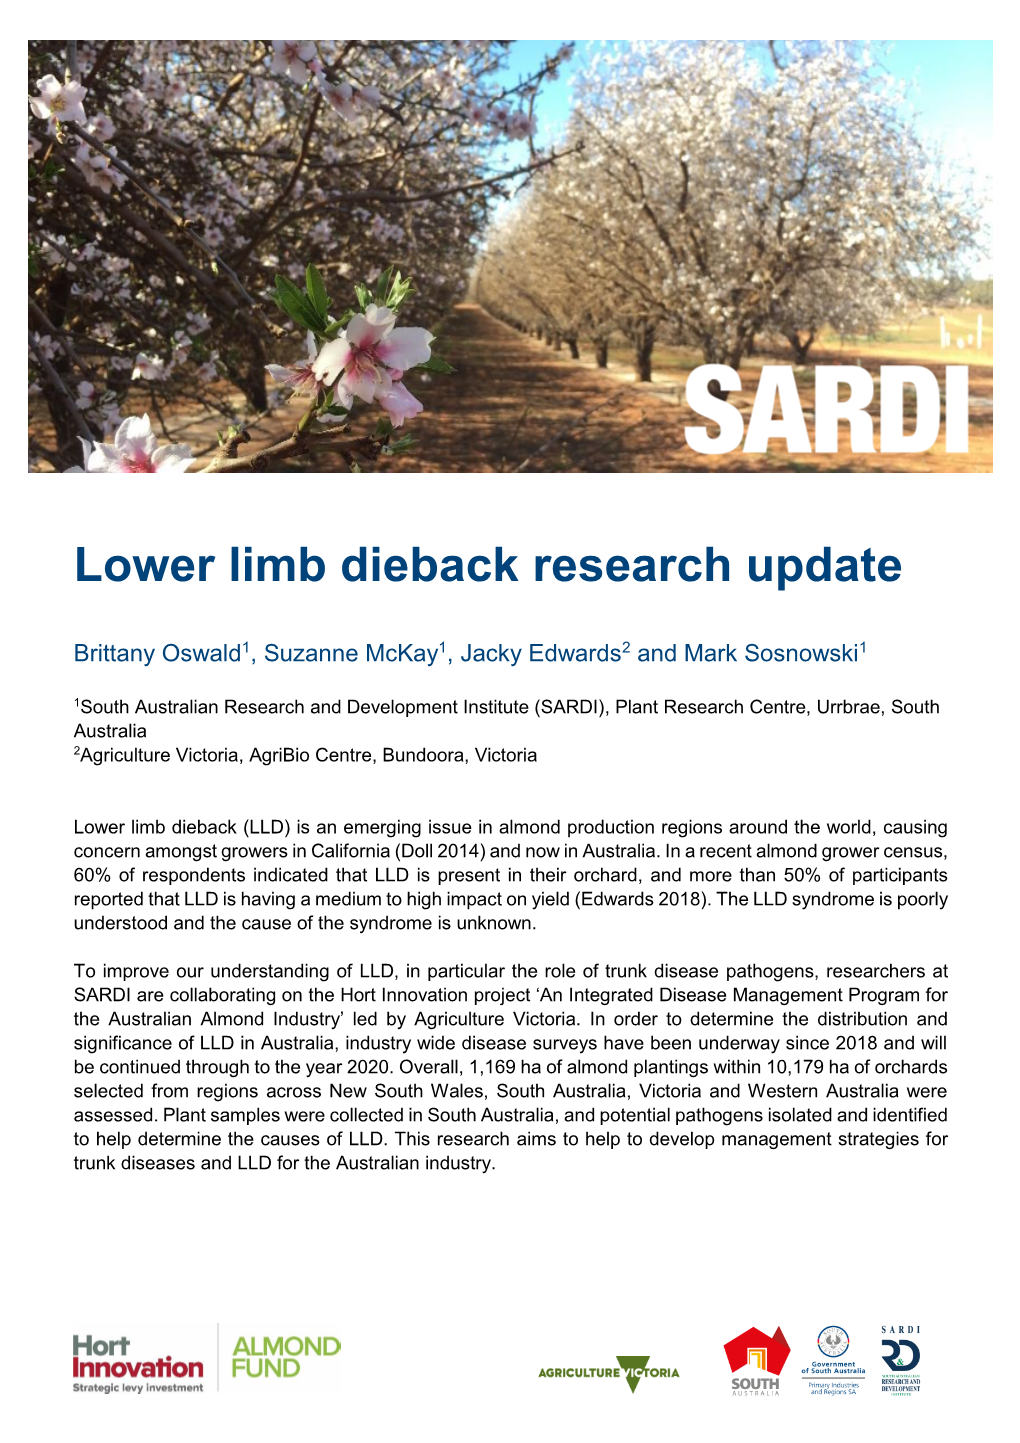 Lower Limb Dieback Research Update